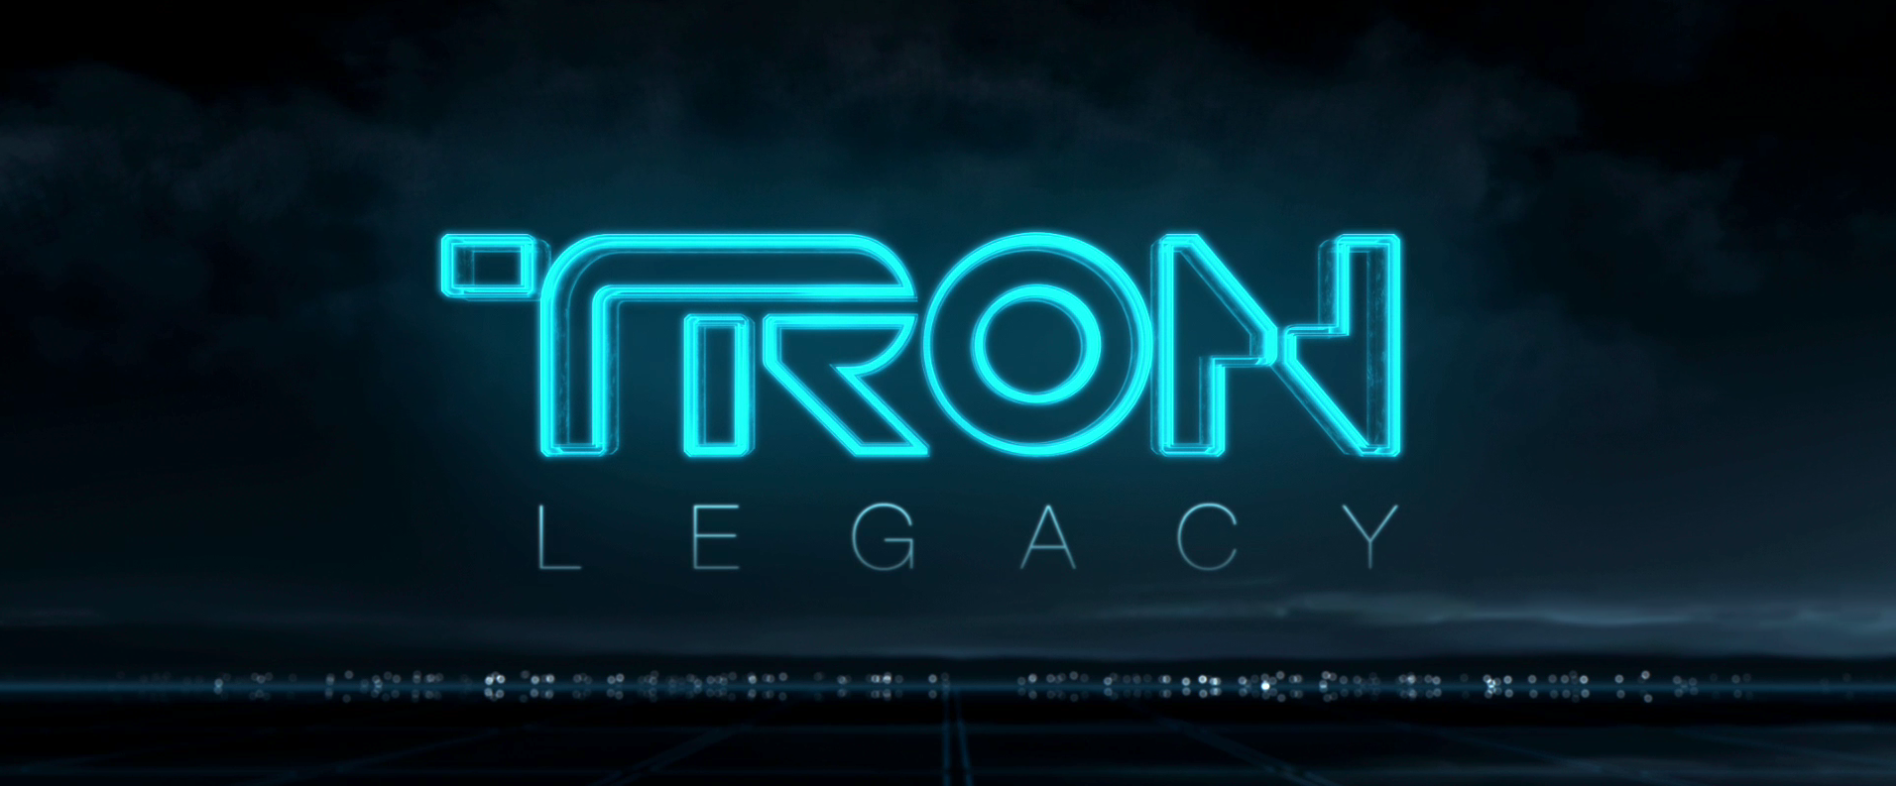 Tron Legacy Movie Logo Landscape Desktop Wallpaper